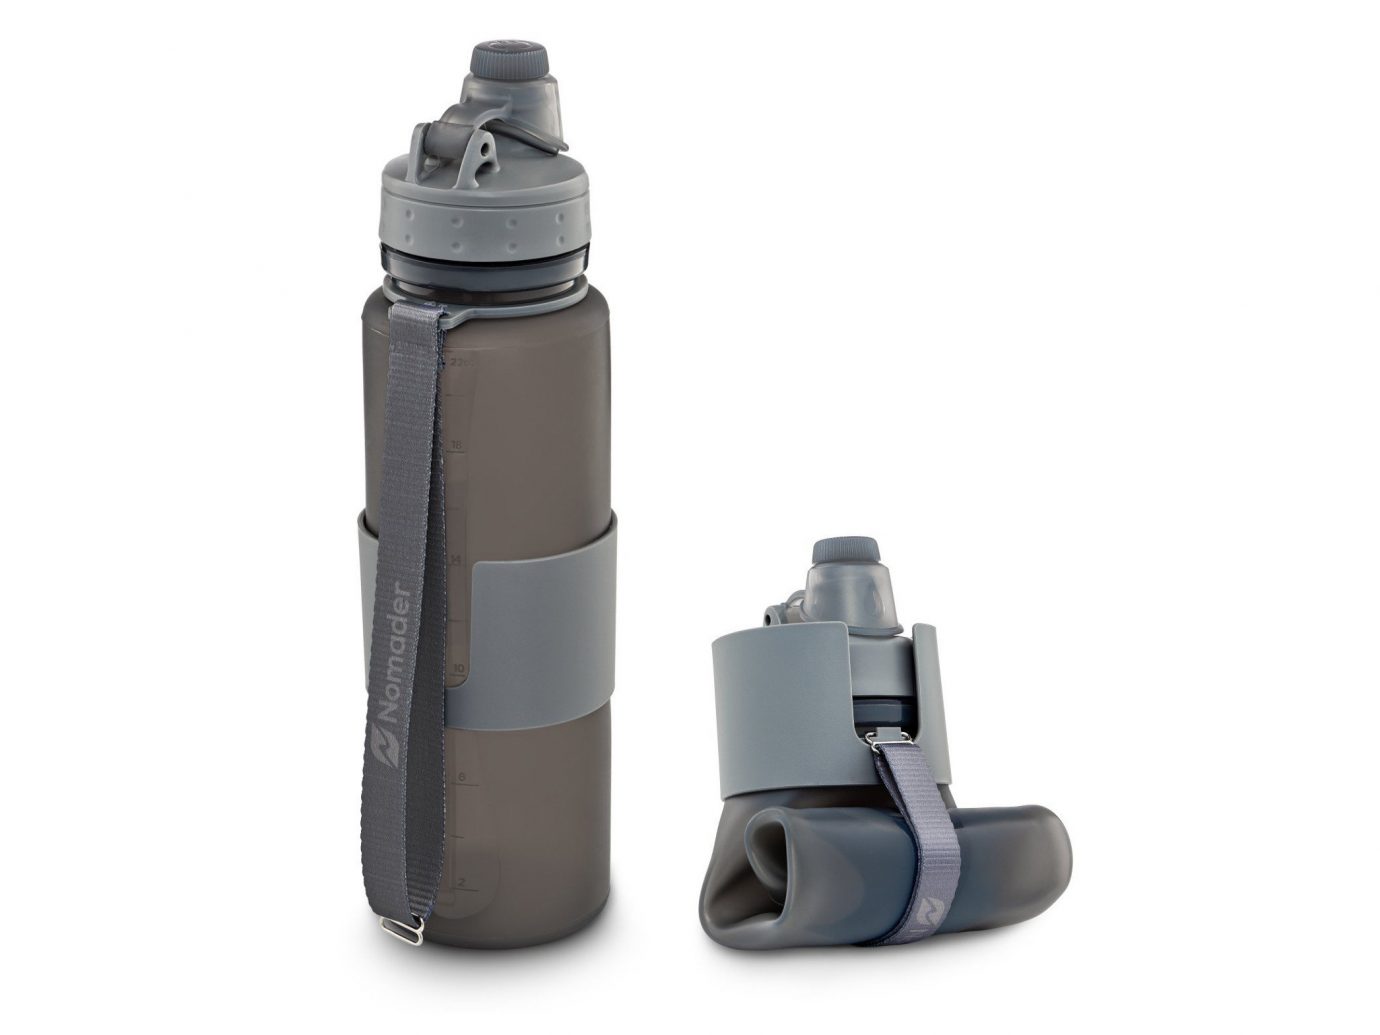 Travel Tips lighter product bottle optical instrument camera lens drinkware